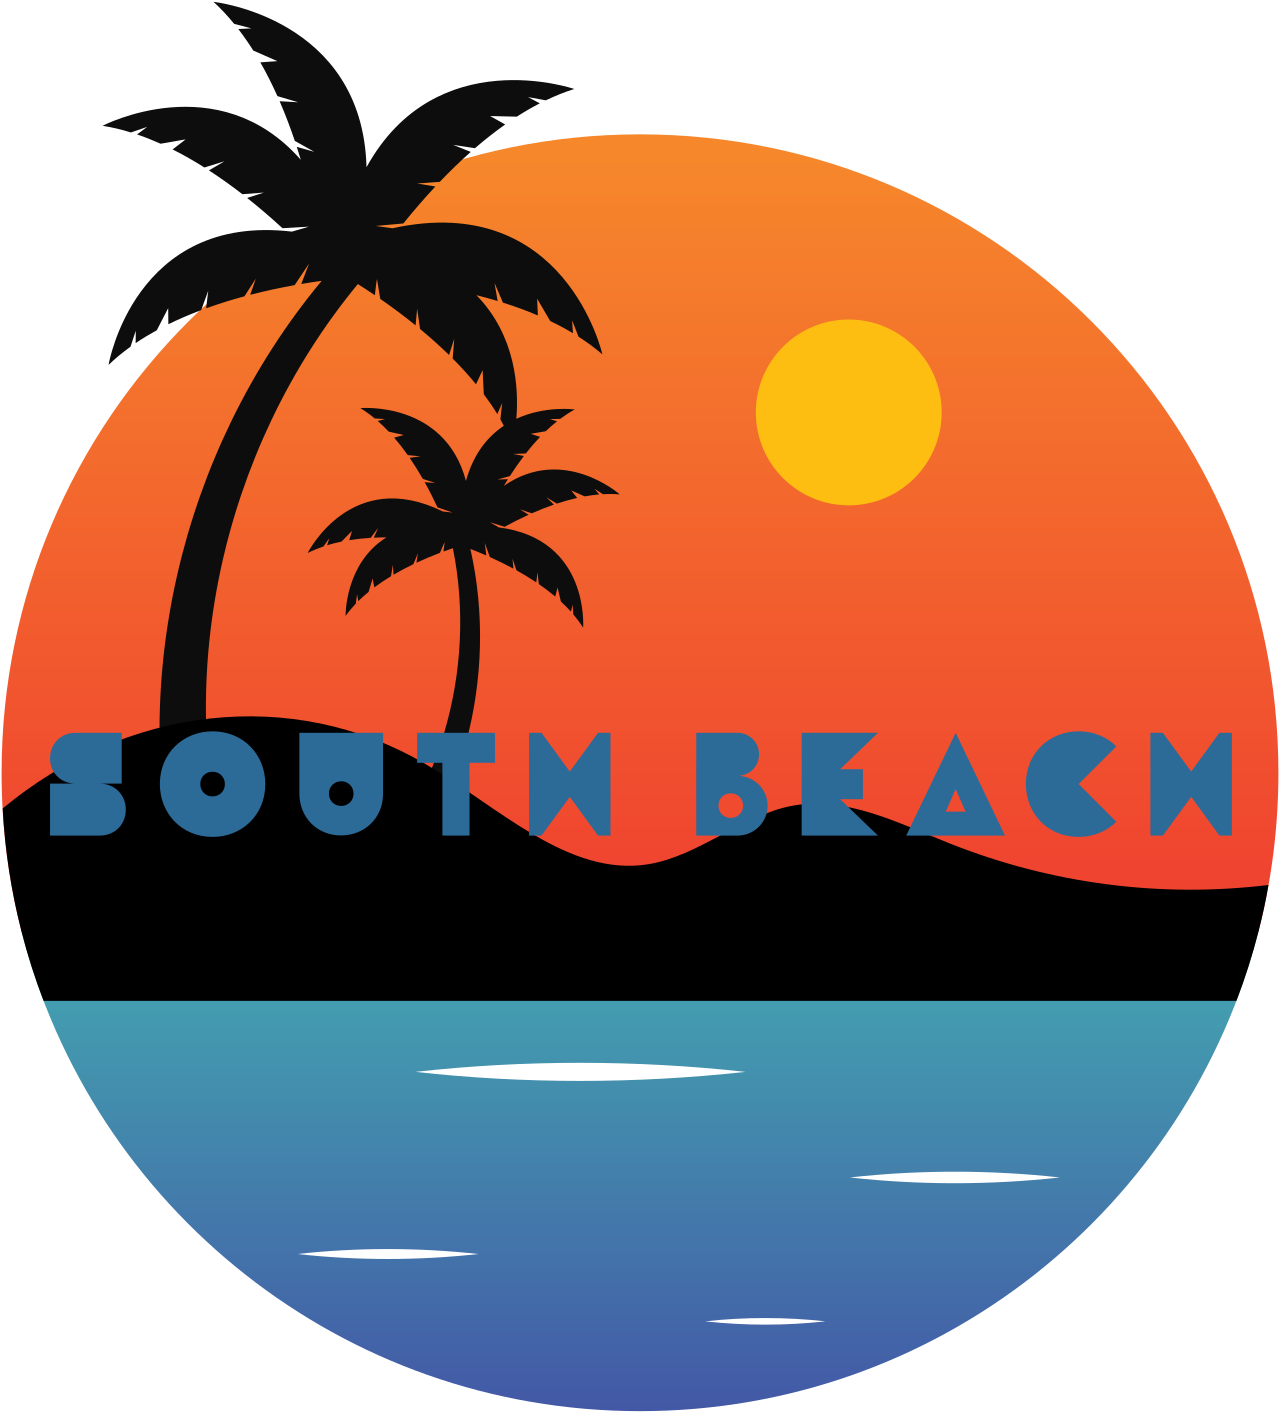 SOUTH BEACH's logo